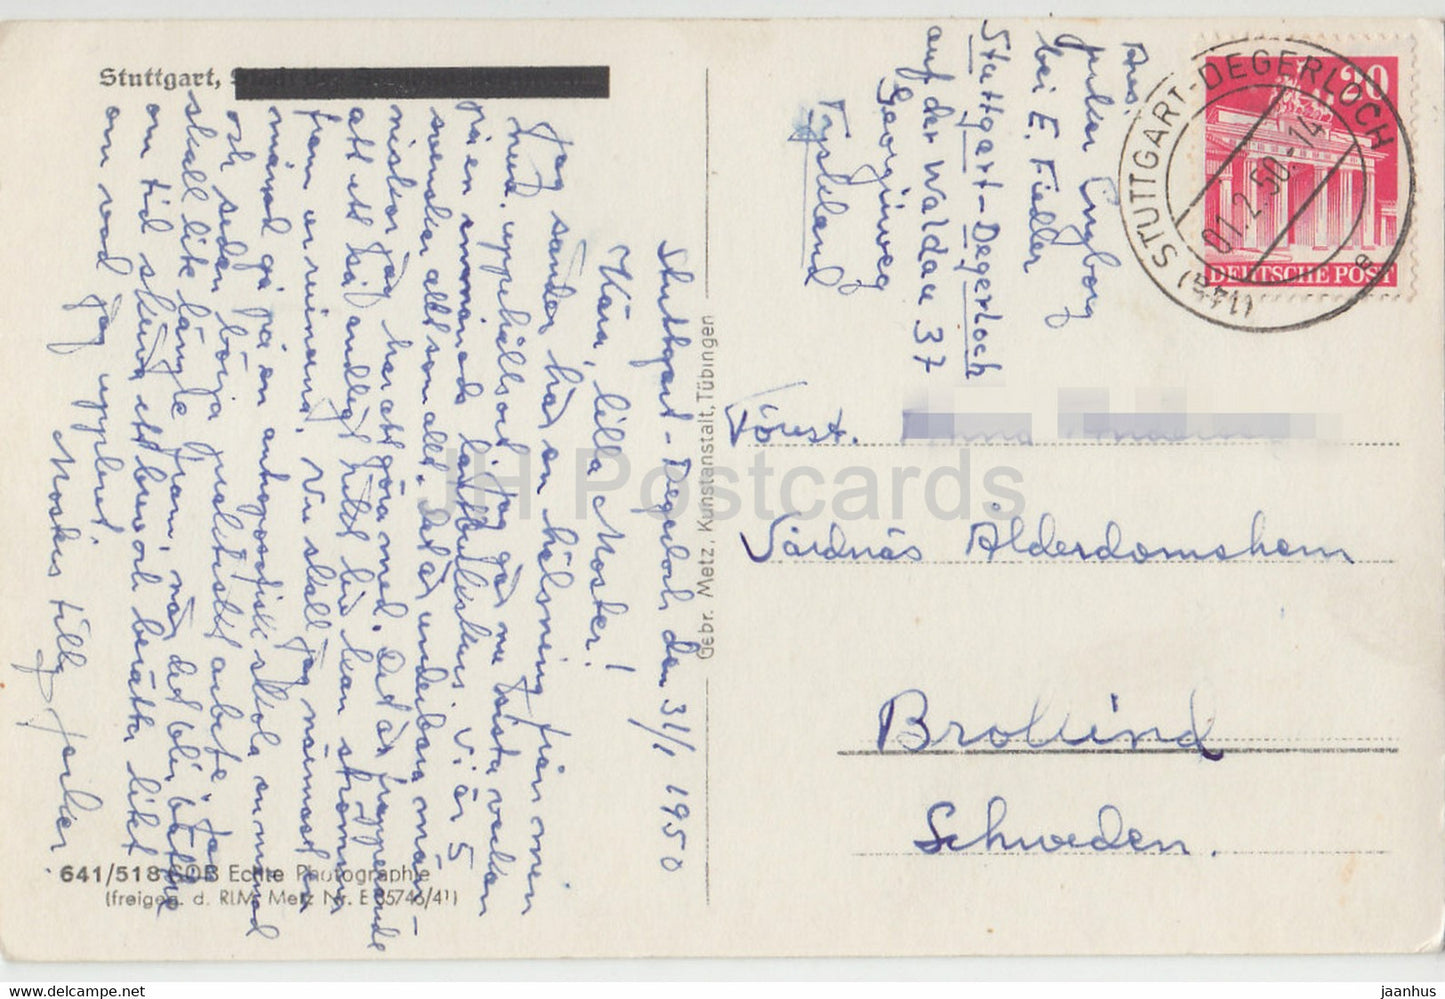 Stuttgart - old postcard - 1950 - Germany - used